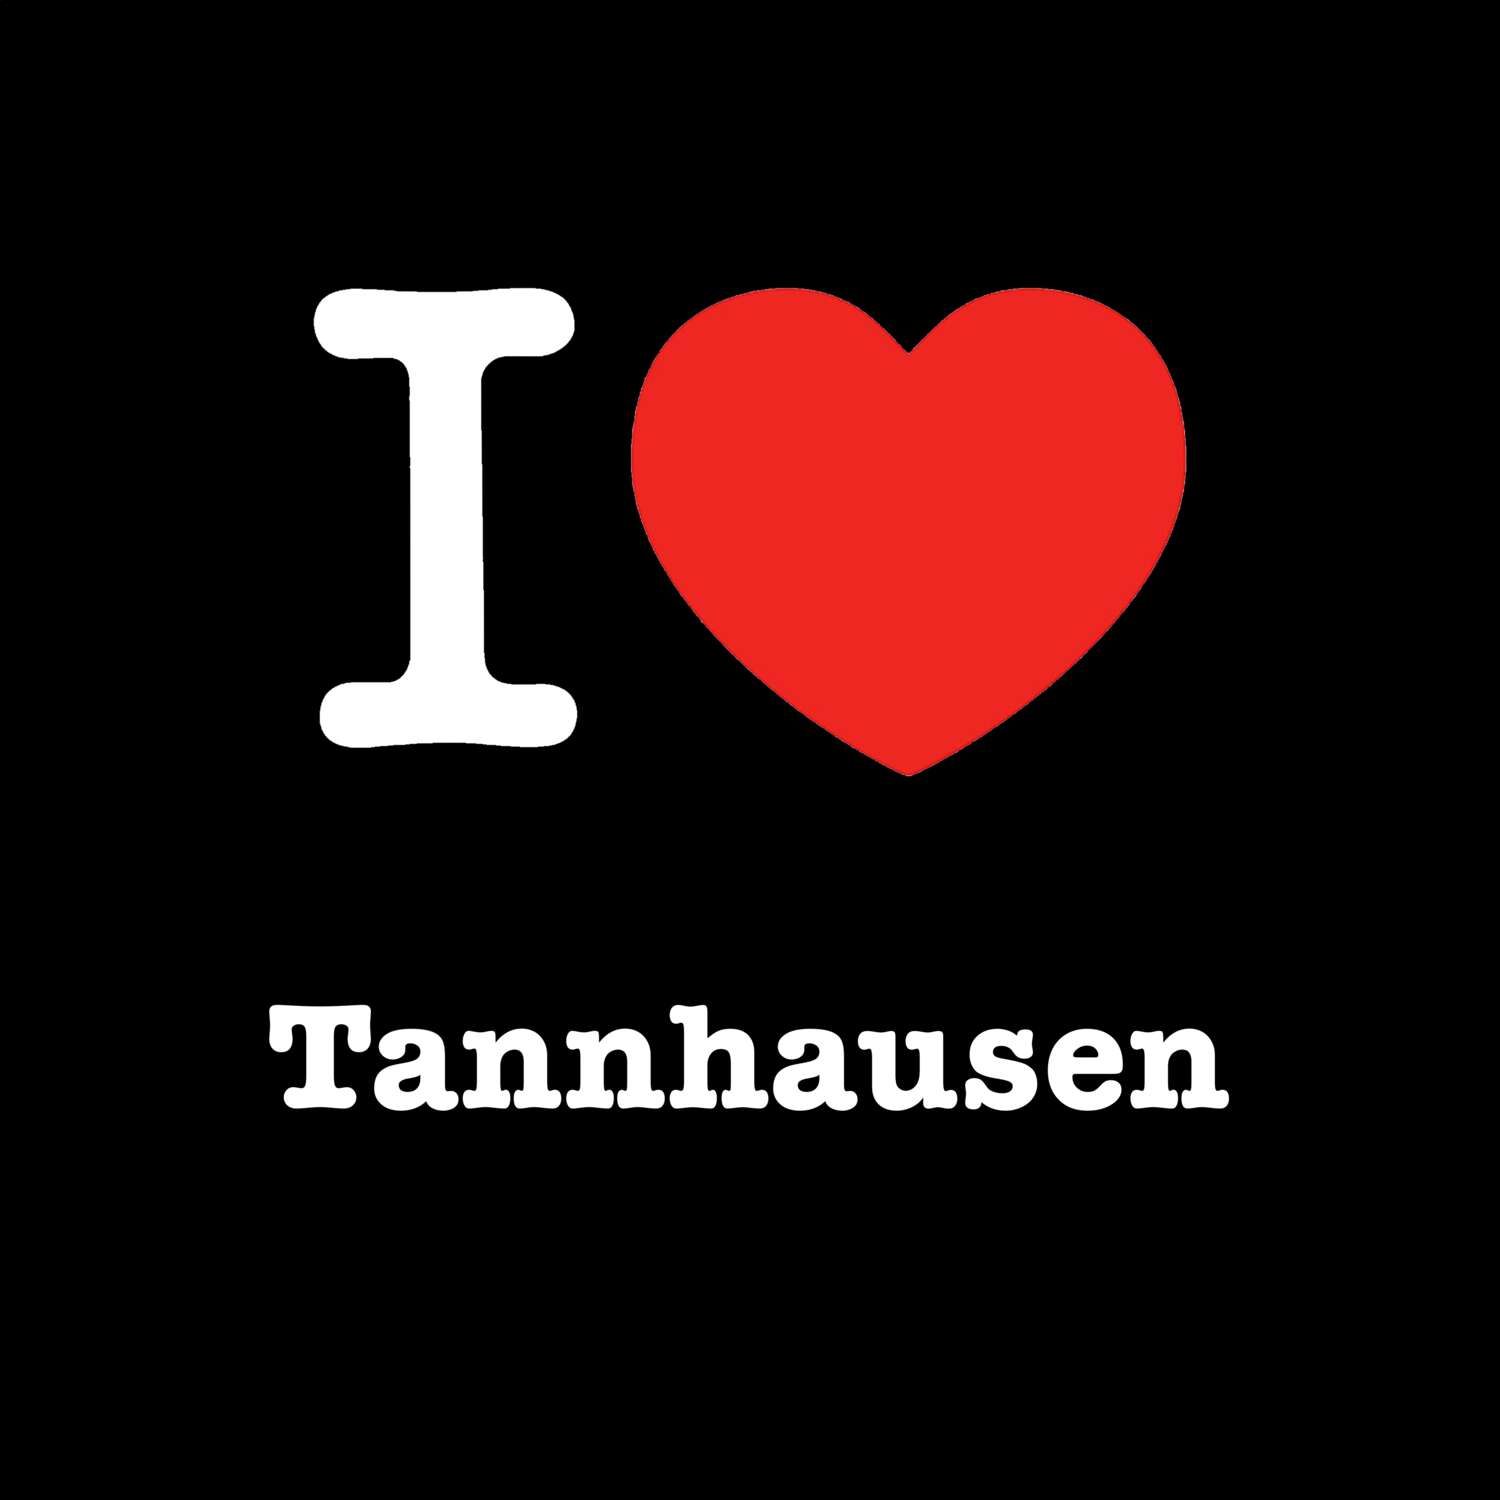 Tannhausen T-Shirt »I love«